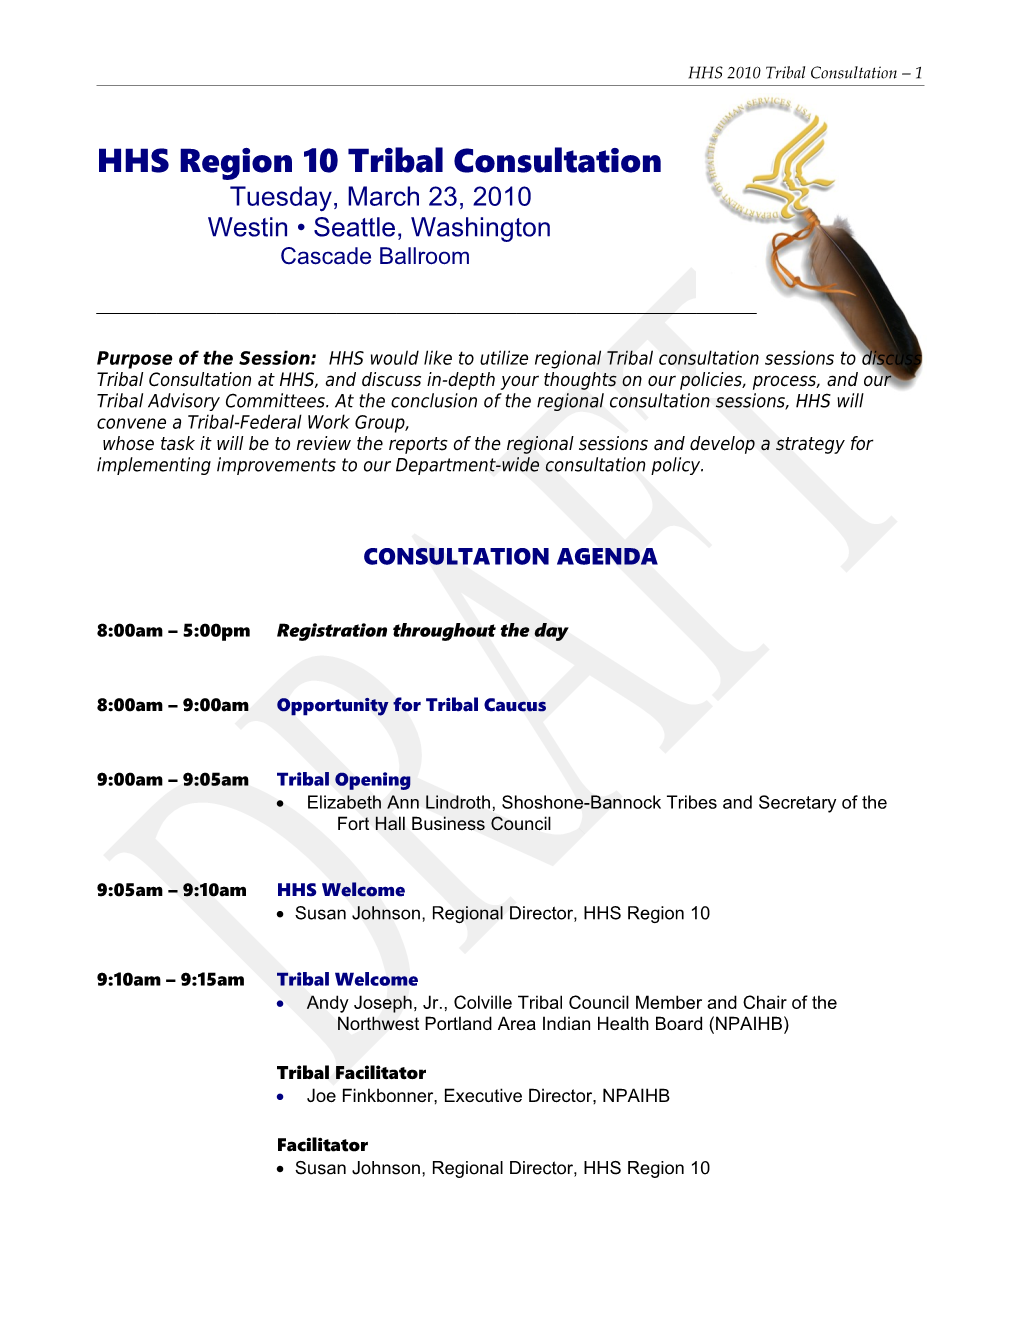 HHS Region 10 Tribal Consultation